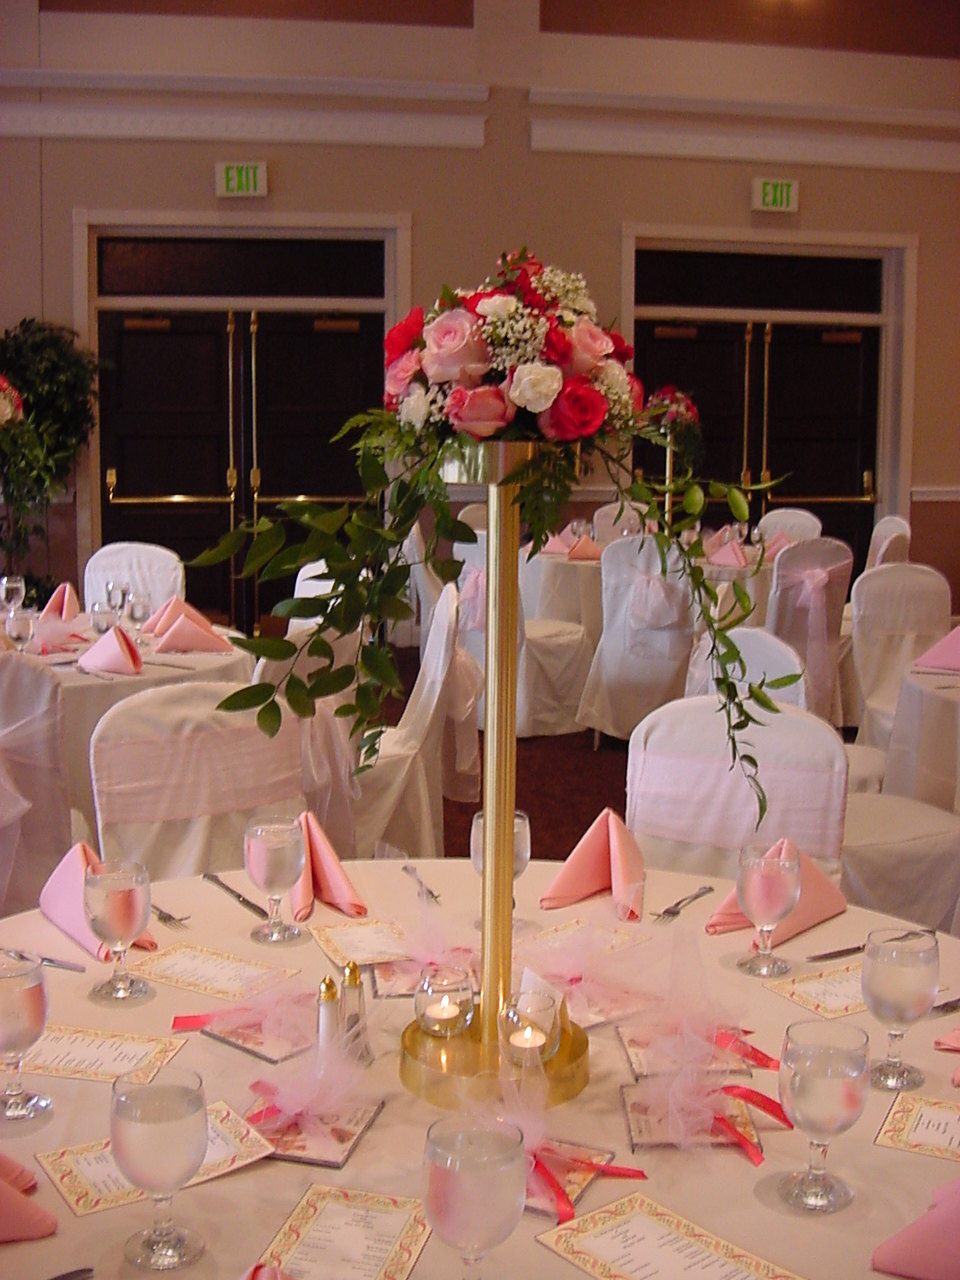 wedding table decorations ideas centerpiece